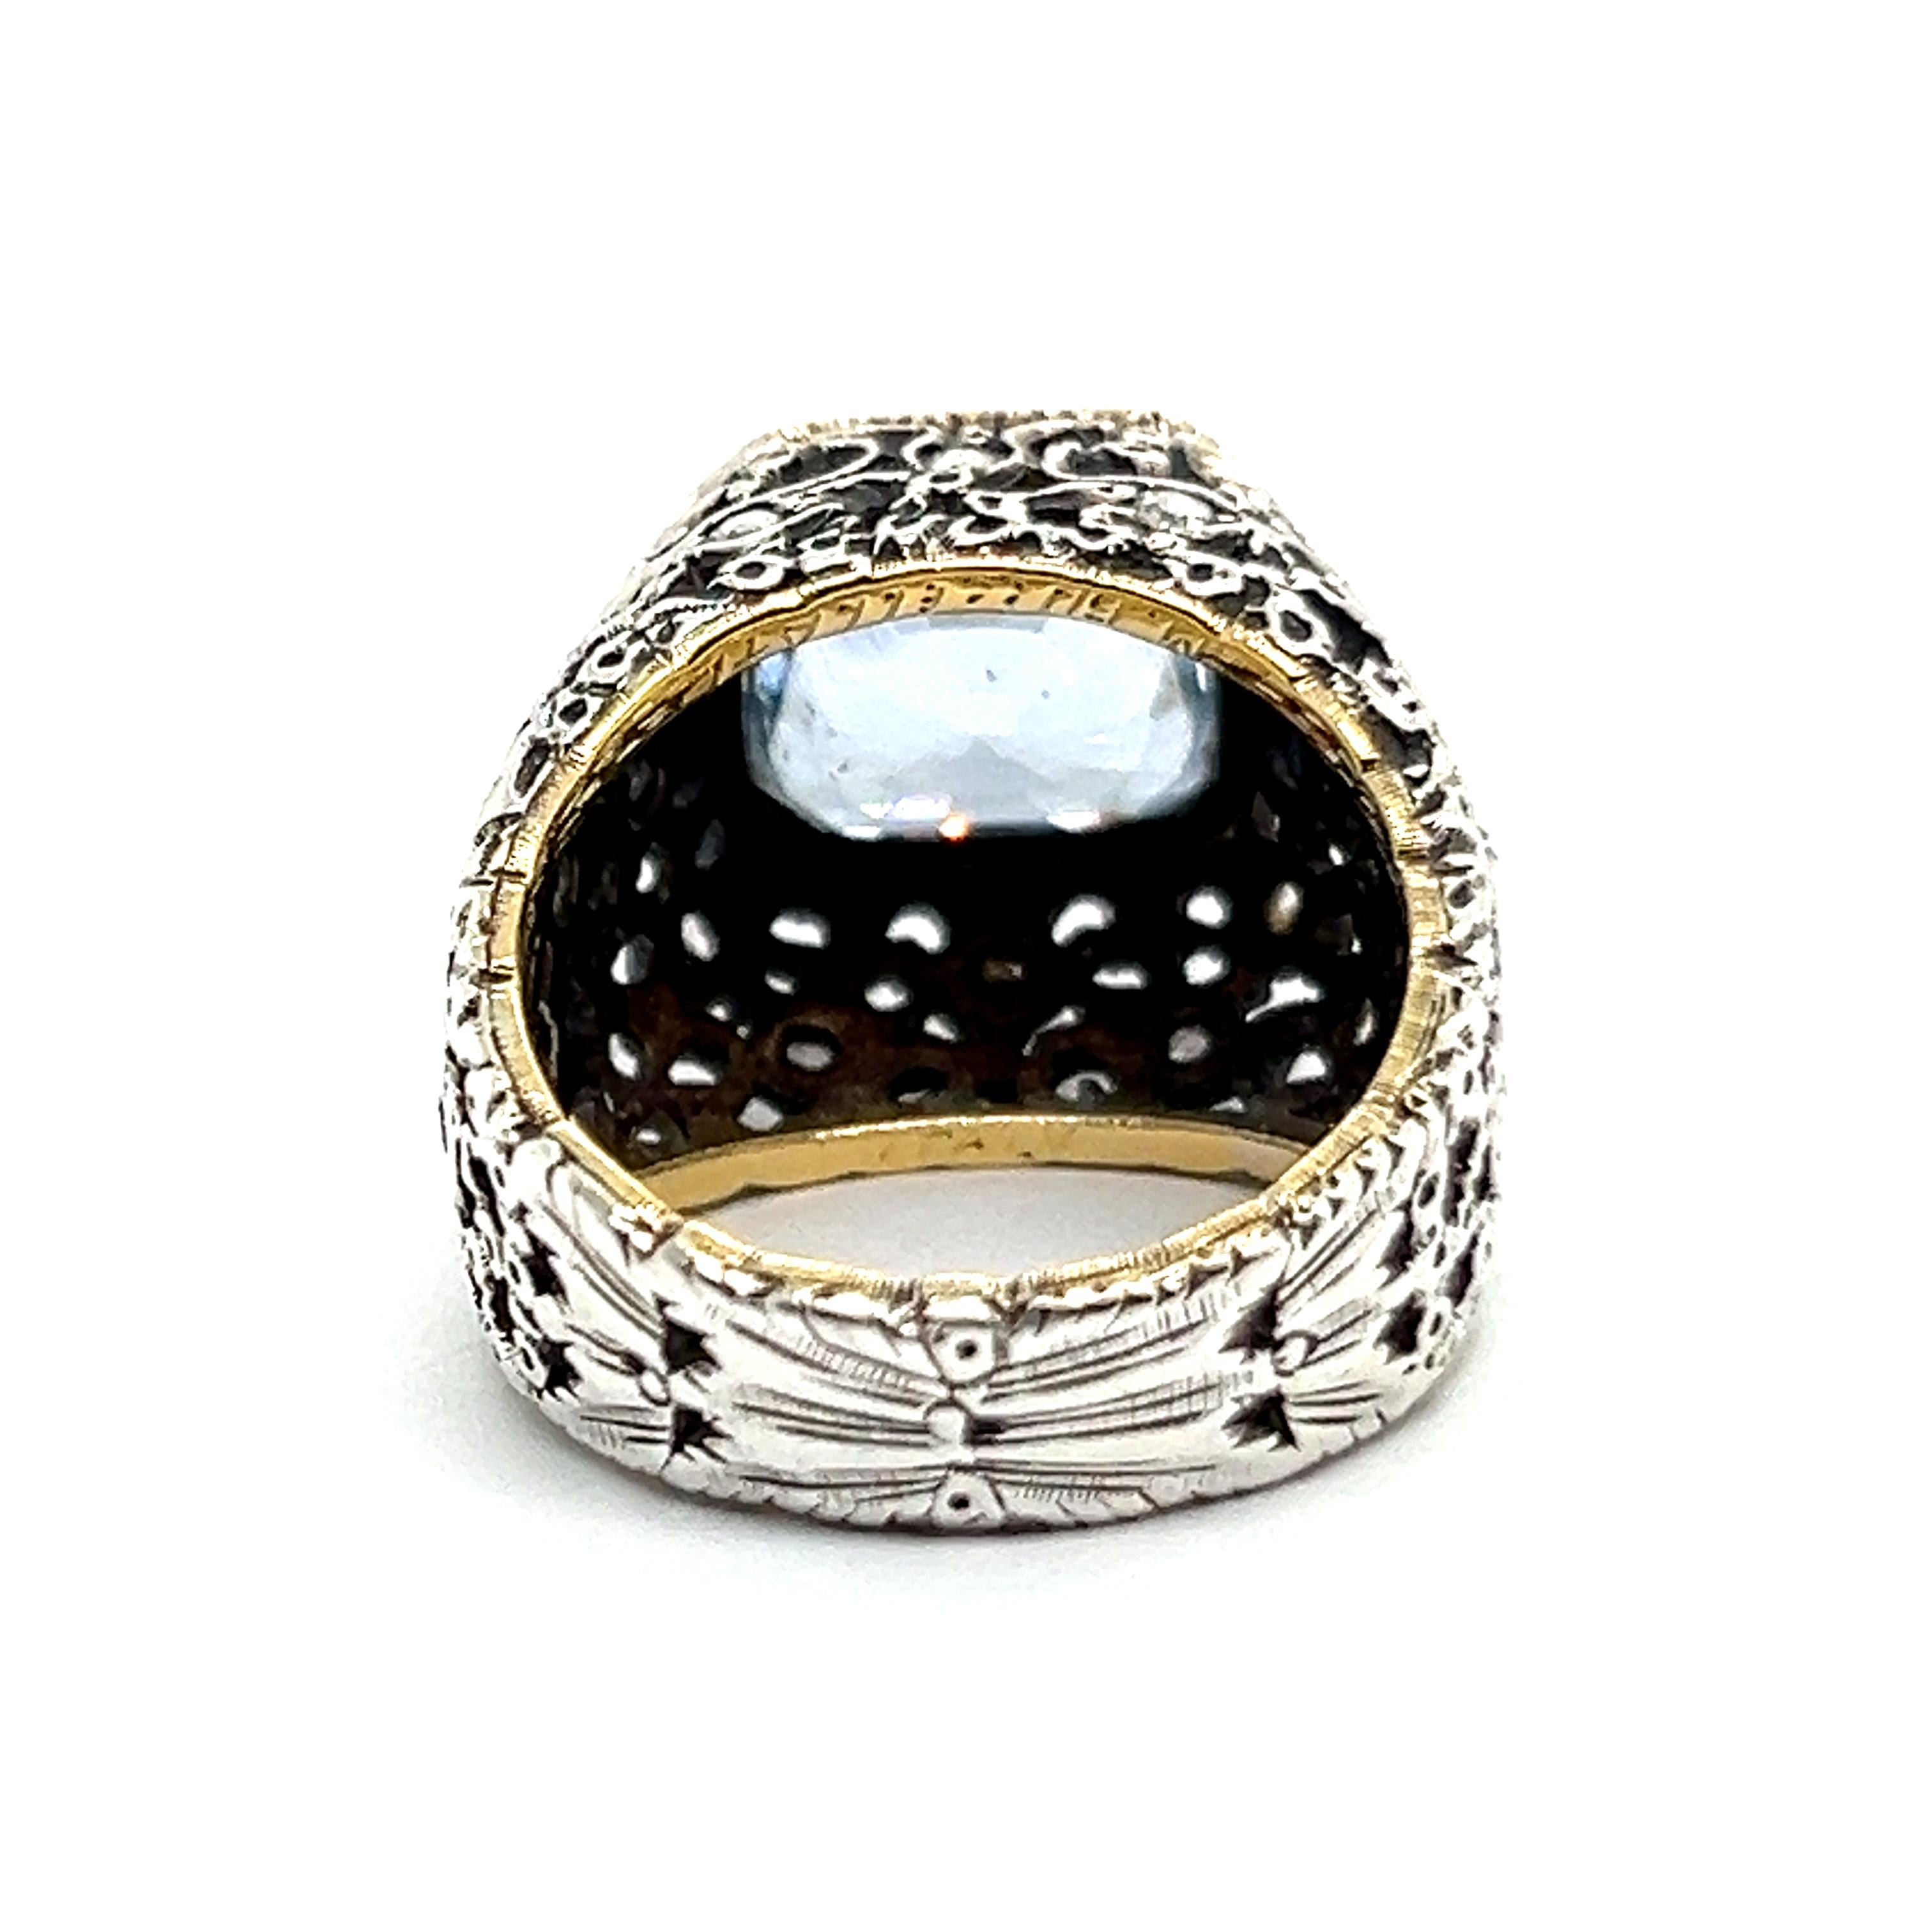 Artist Sapphire and Diamonds Ring in Silver & 18 Karat Yellow Gold by Mario Buccellati